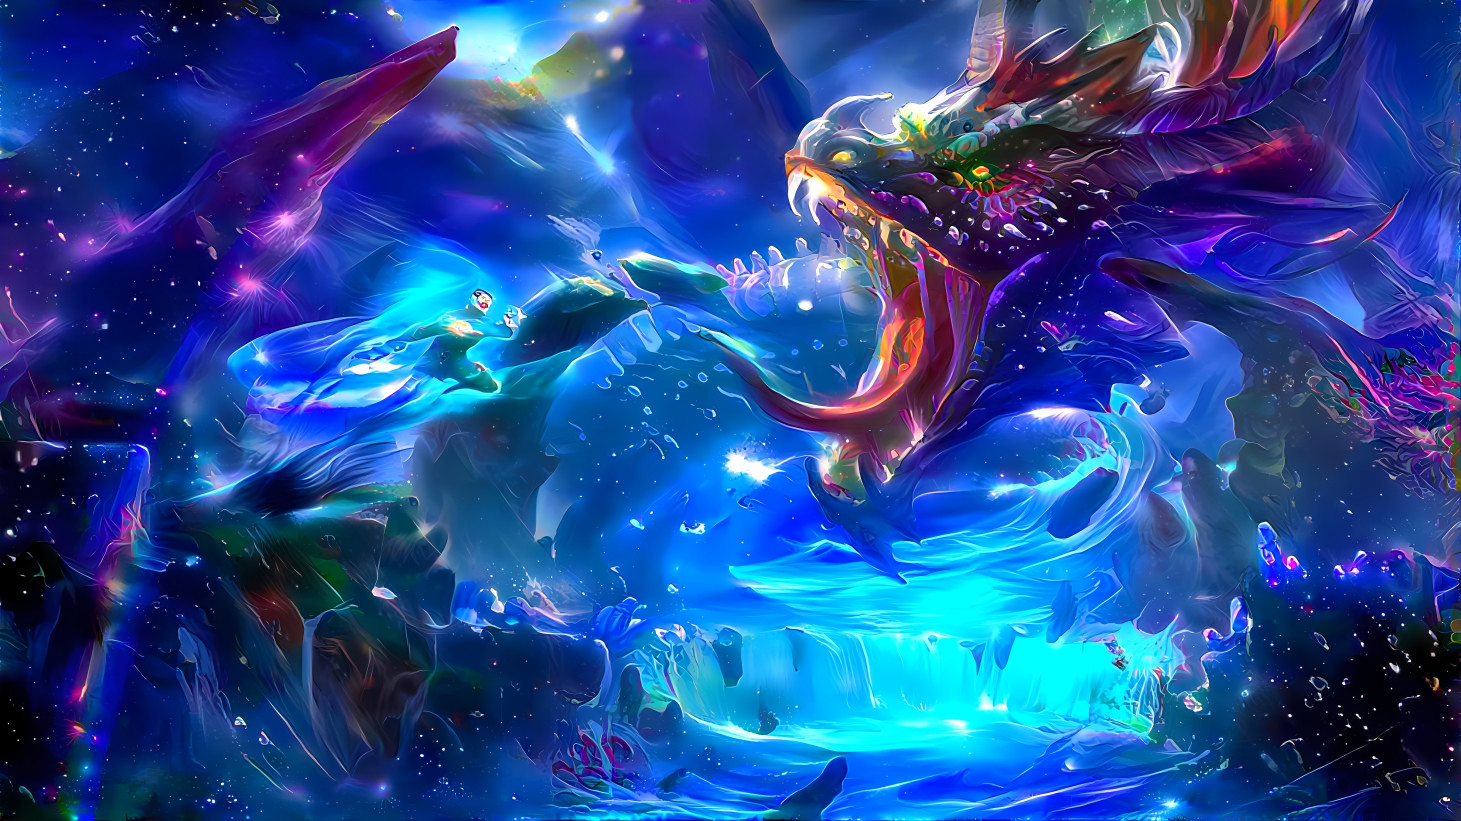 Water Dragon vs Warrior